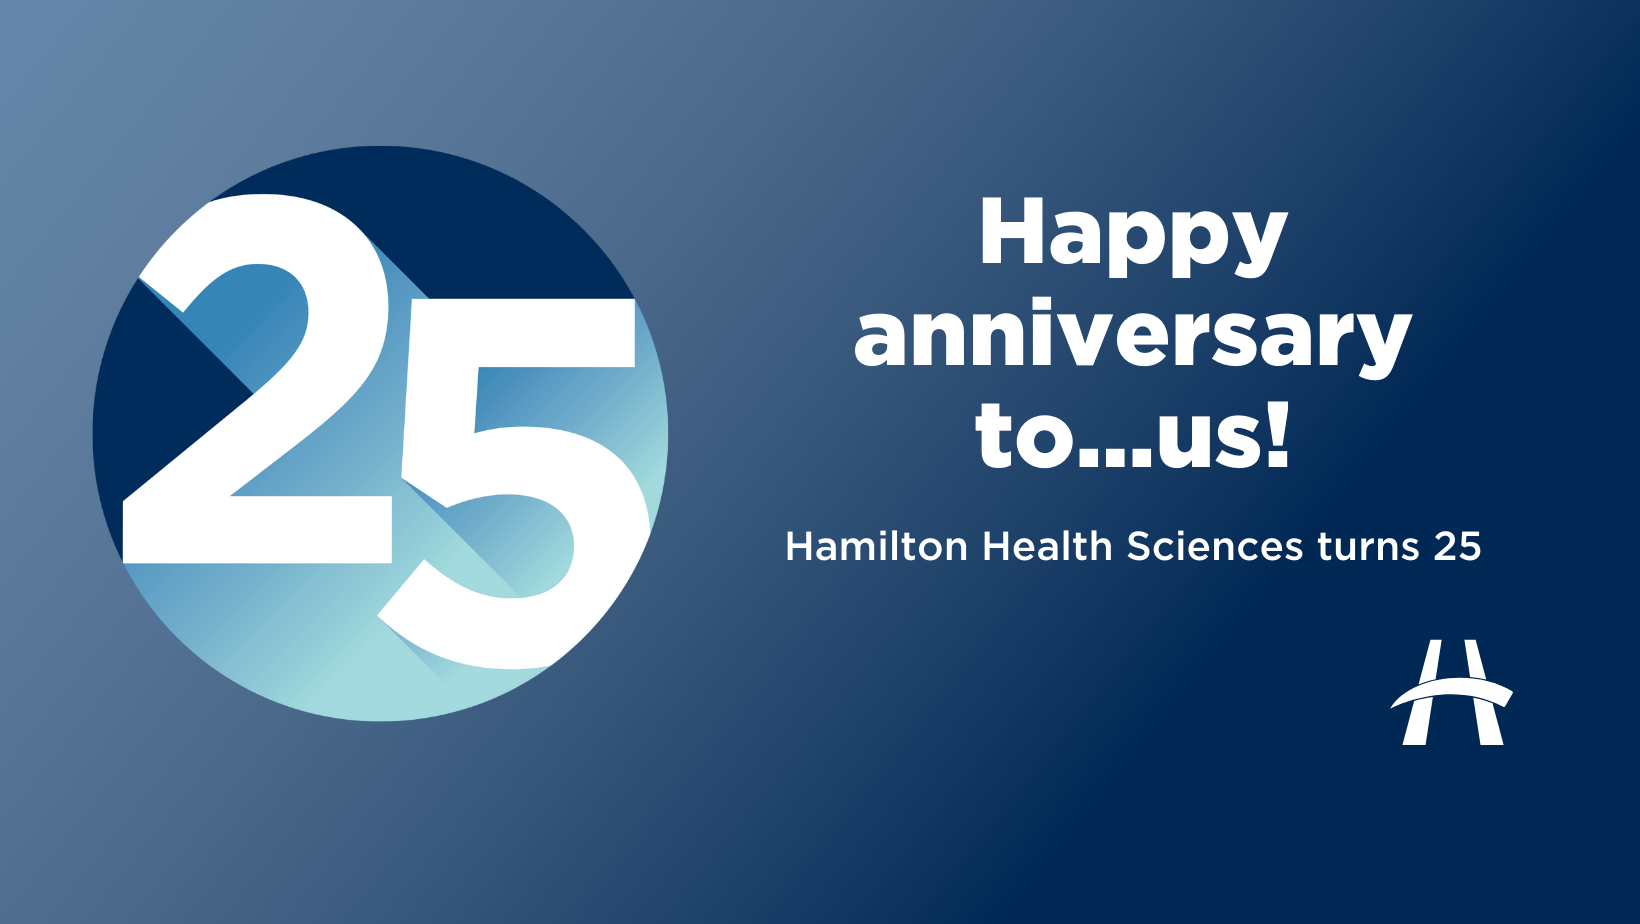 Happy anniversary to...us! Hamilton Health Sciences turns 25